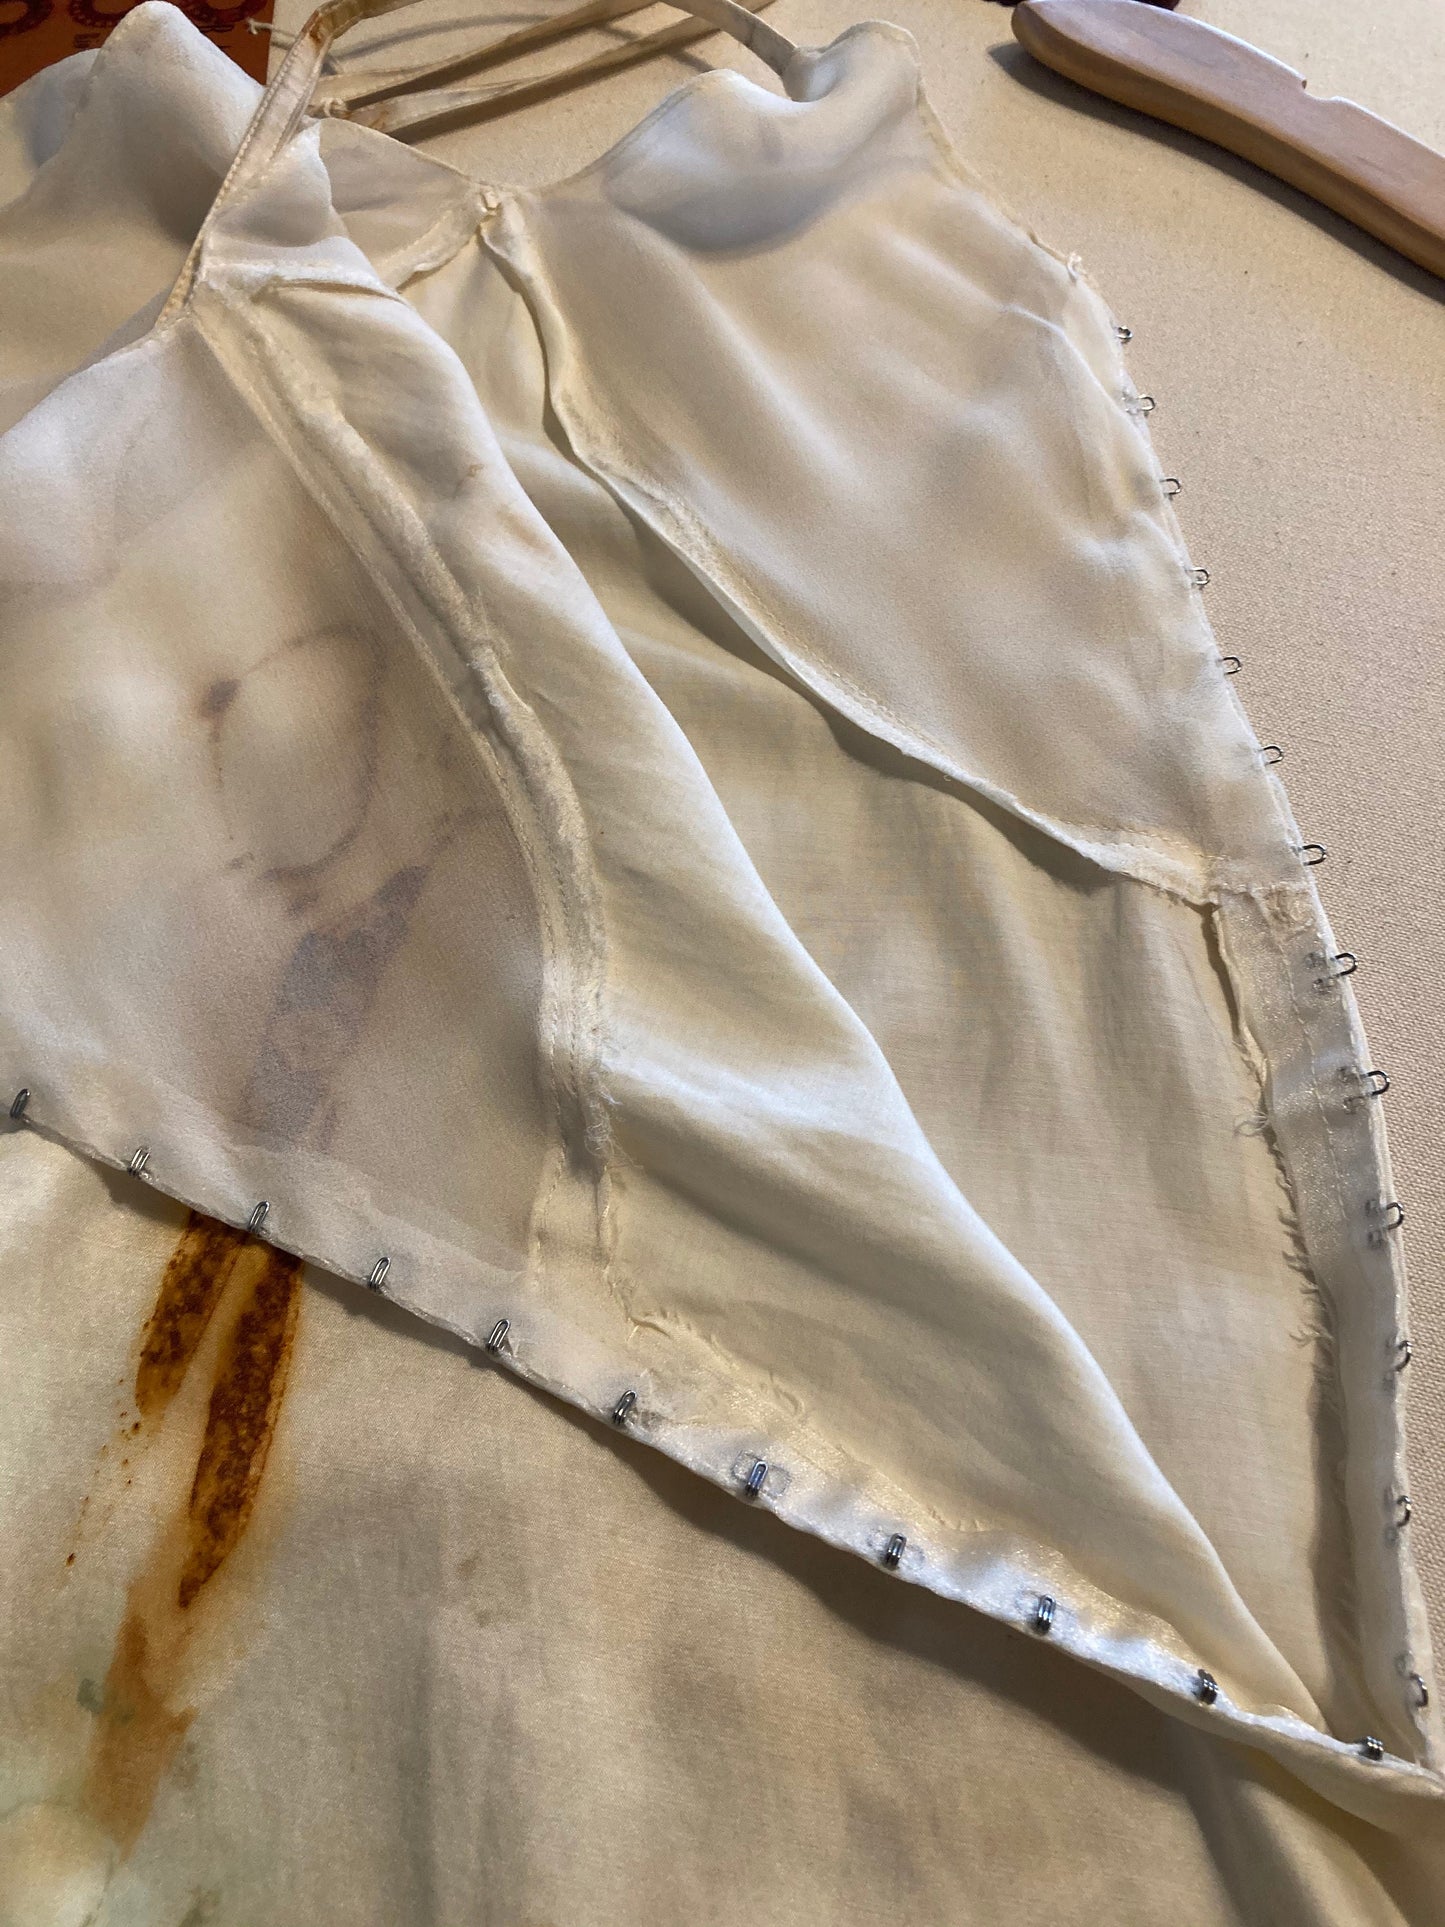 Sheer top slip- rust printed- cotton/ silk blend - lingerie